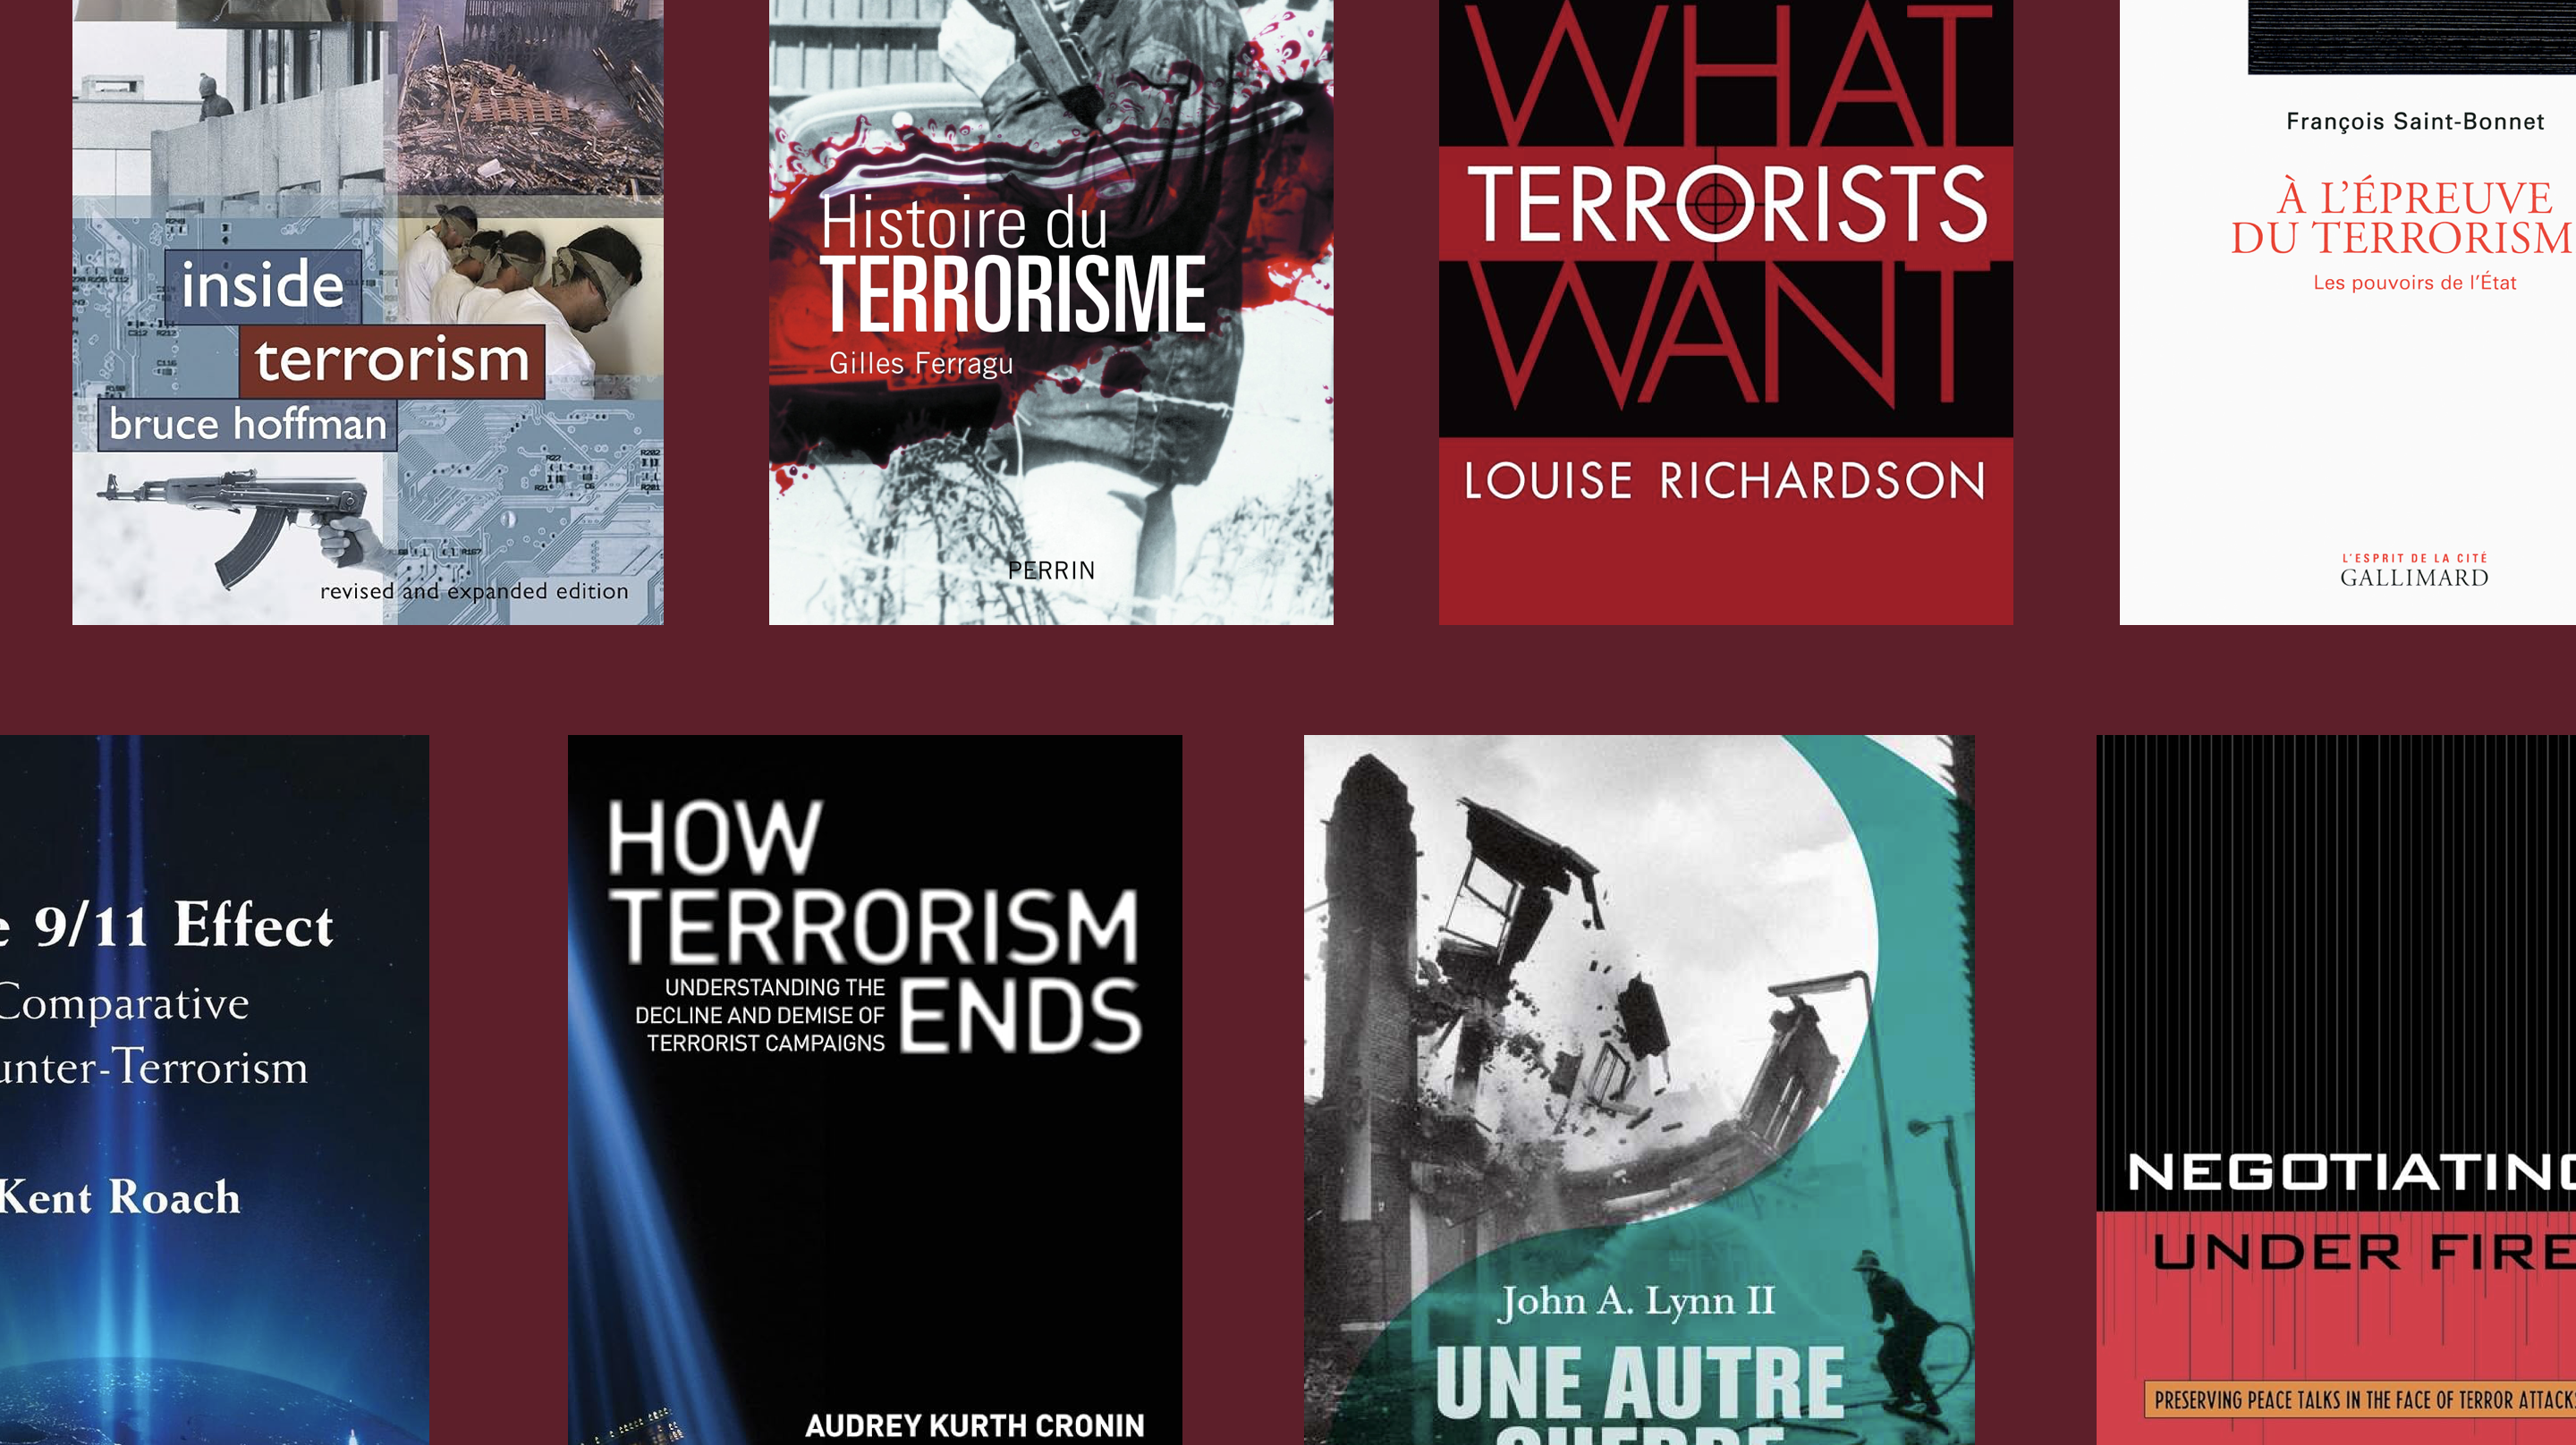 Hugo Micheron: «Le djihadisme ne se limite en rien aux attentats»